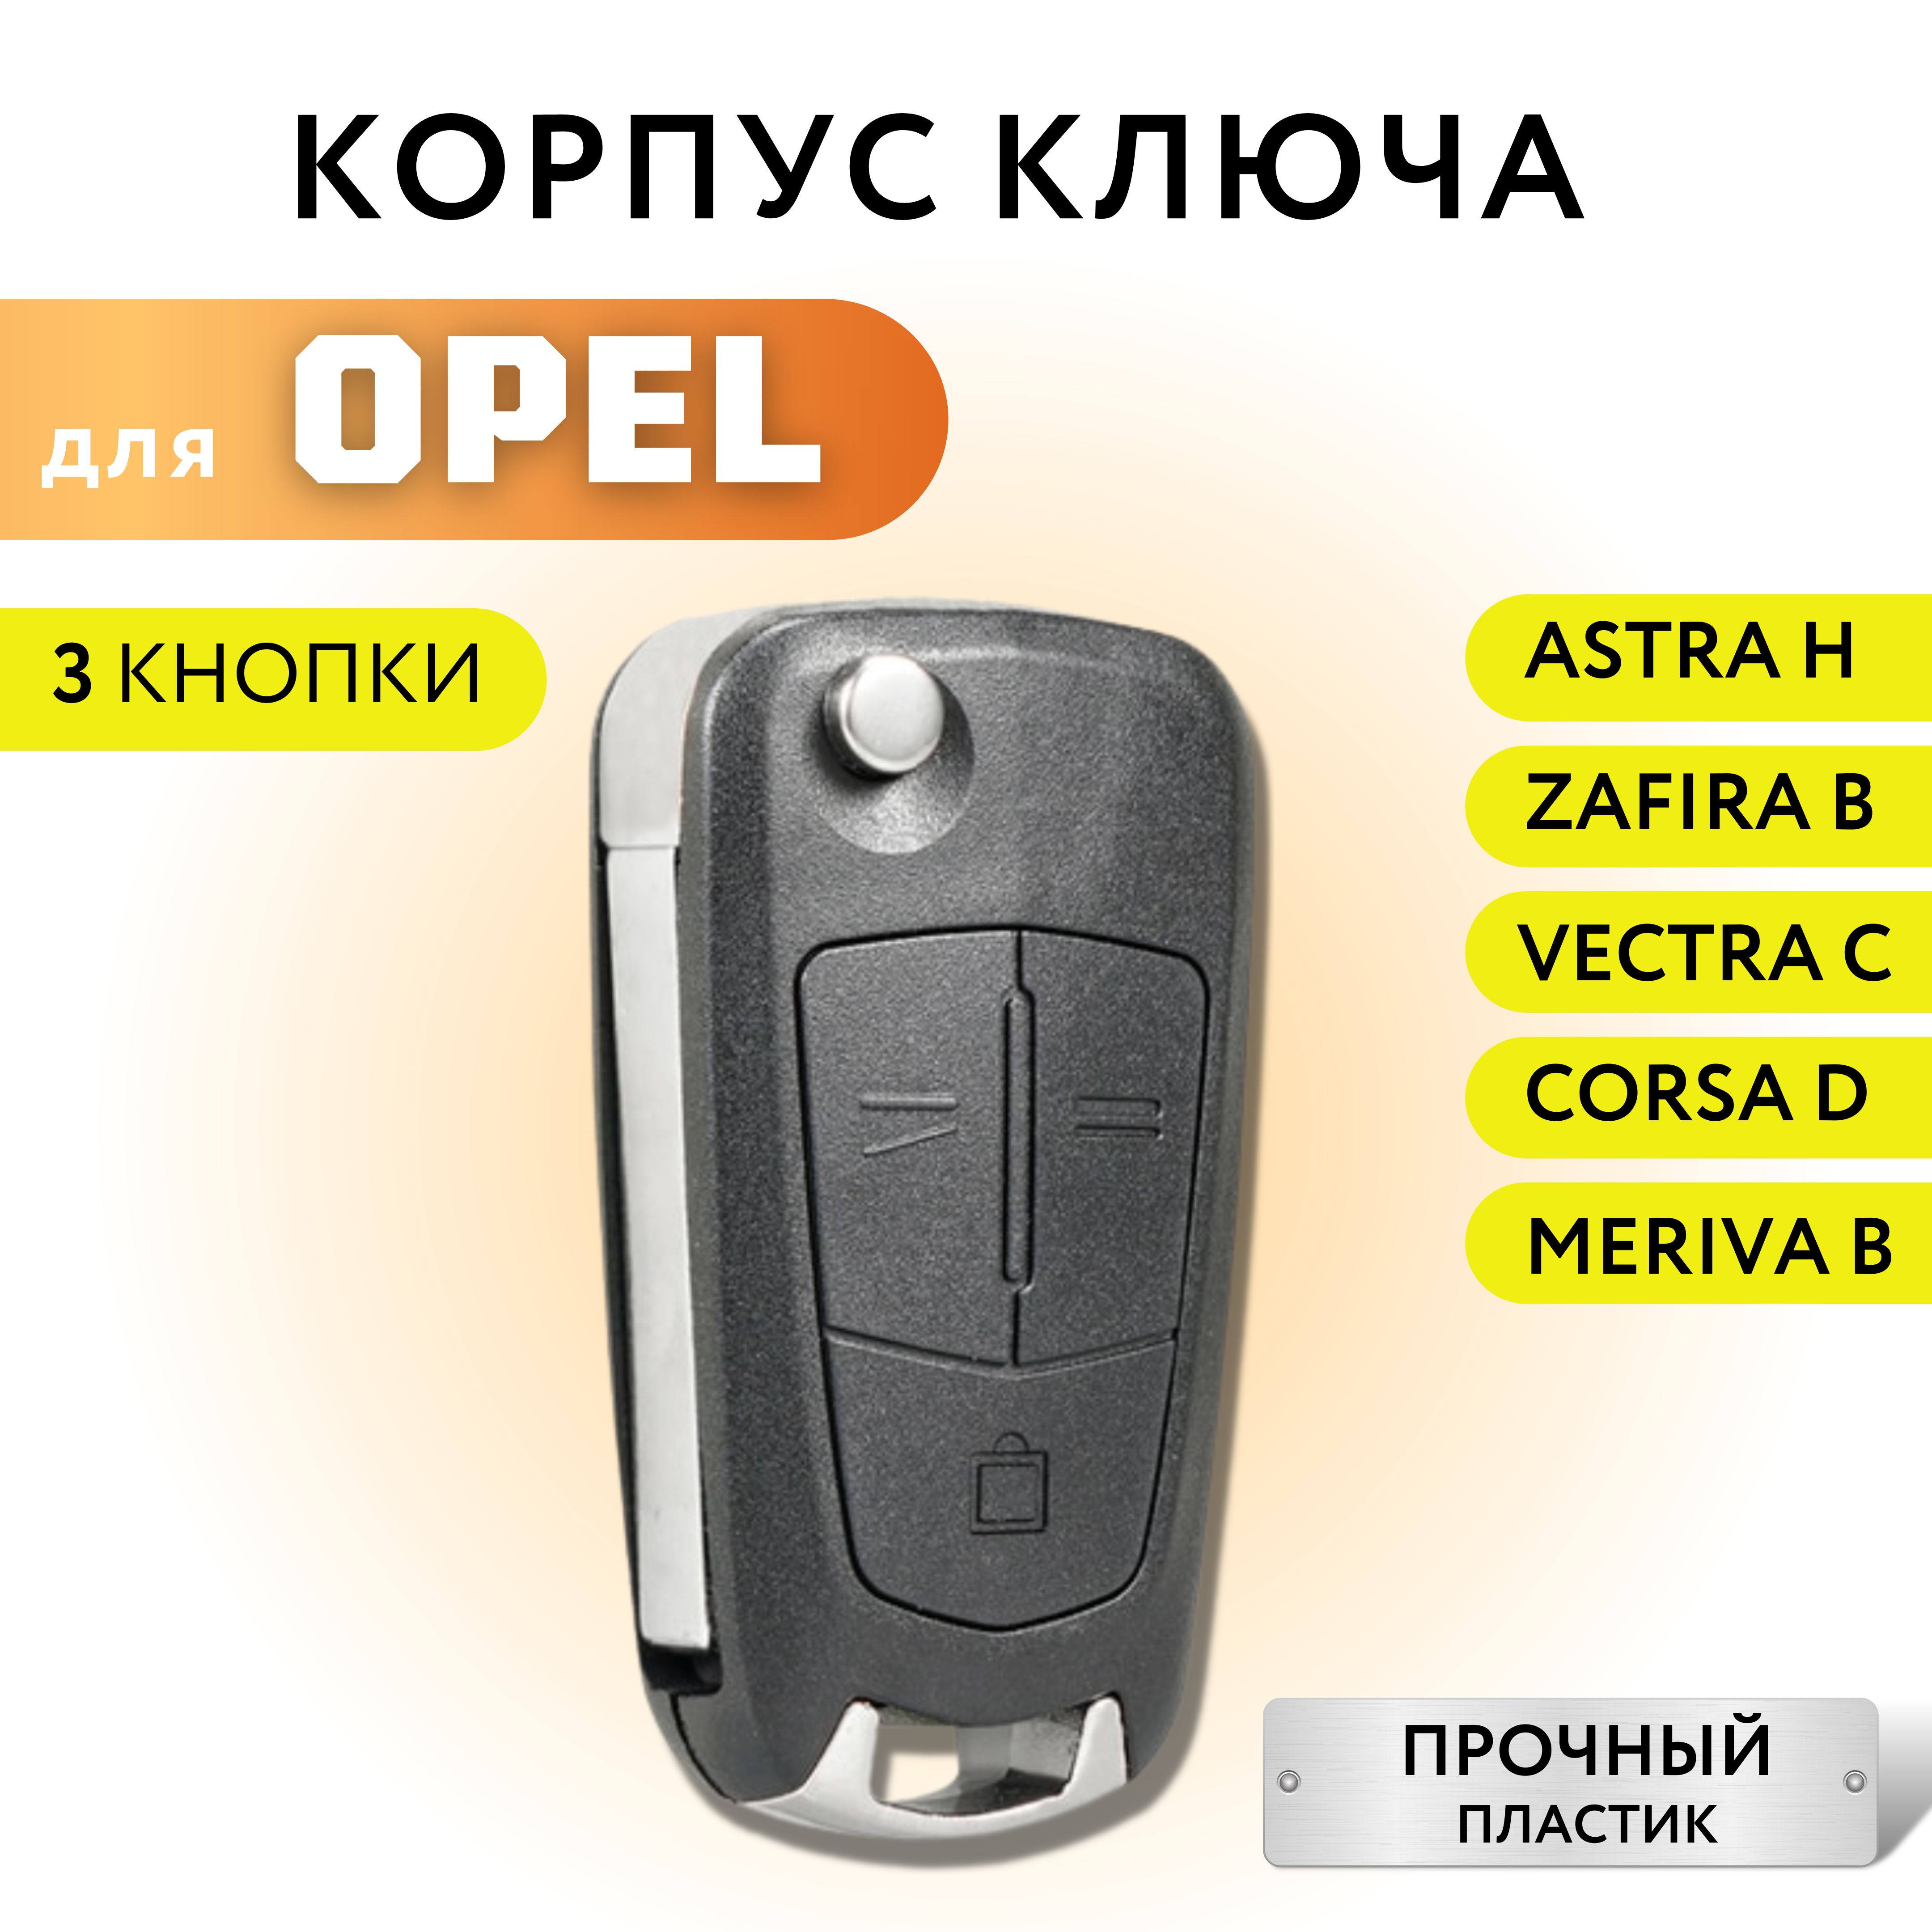 Ключ зафира б. Ключ Опель. Ключ Opel Zafira b. Смарт ключ Opel Zafira b. Changan ключ зажигания.